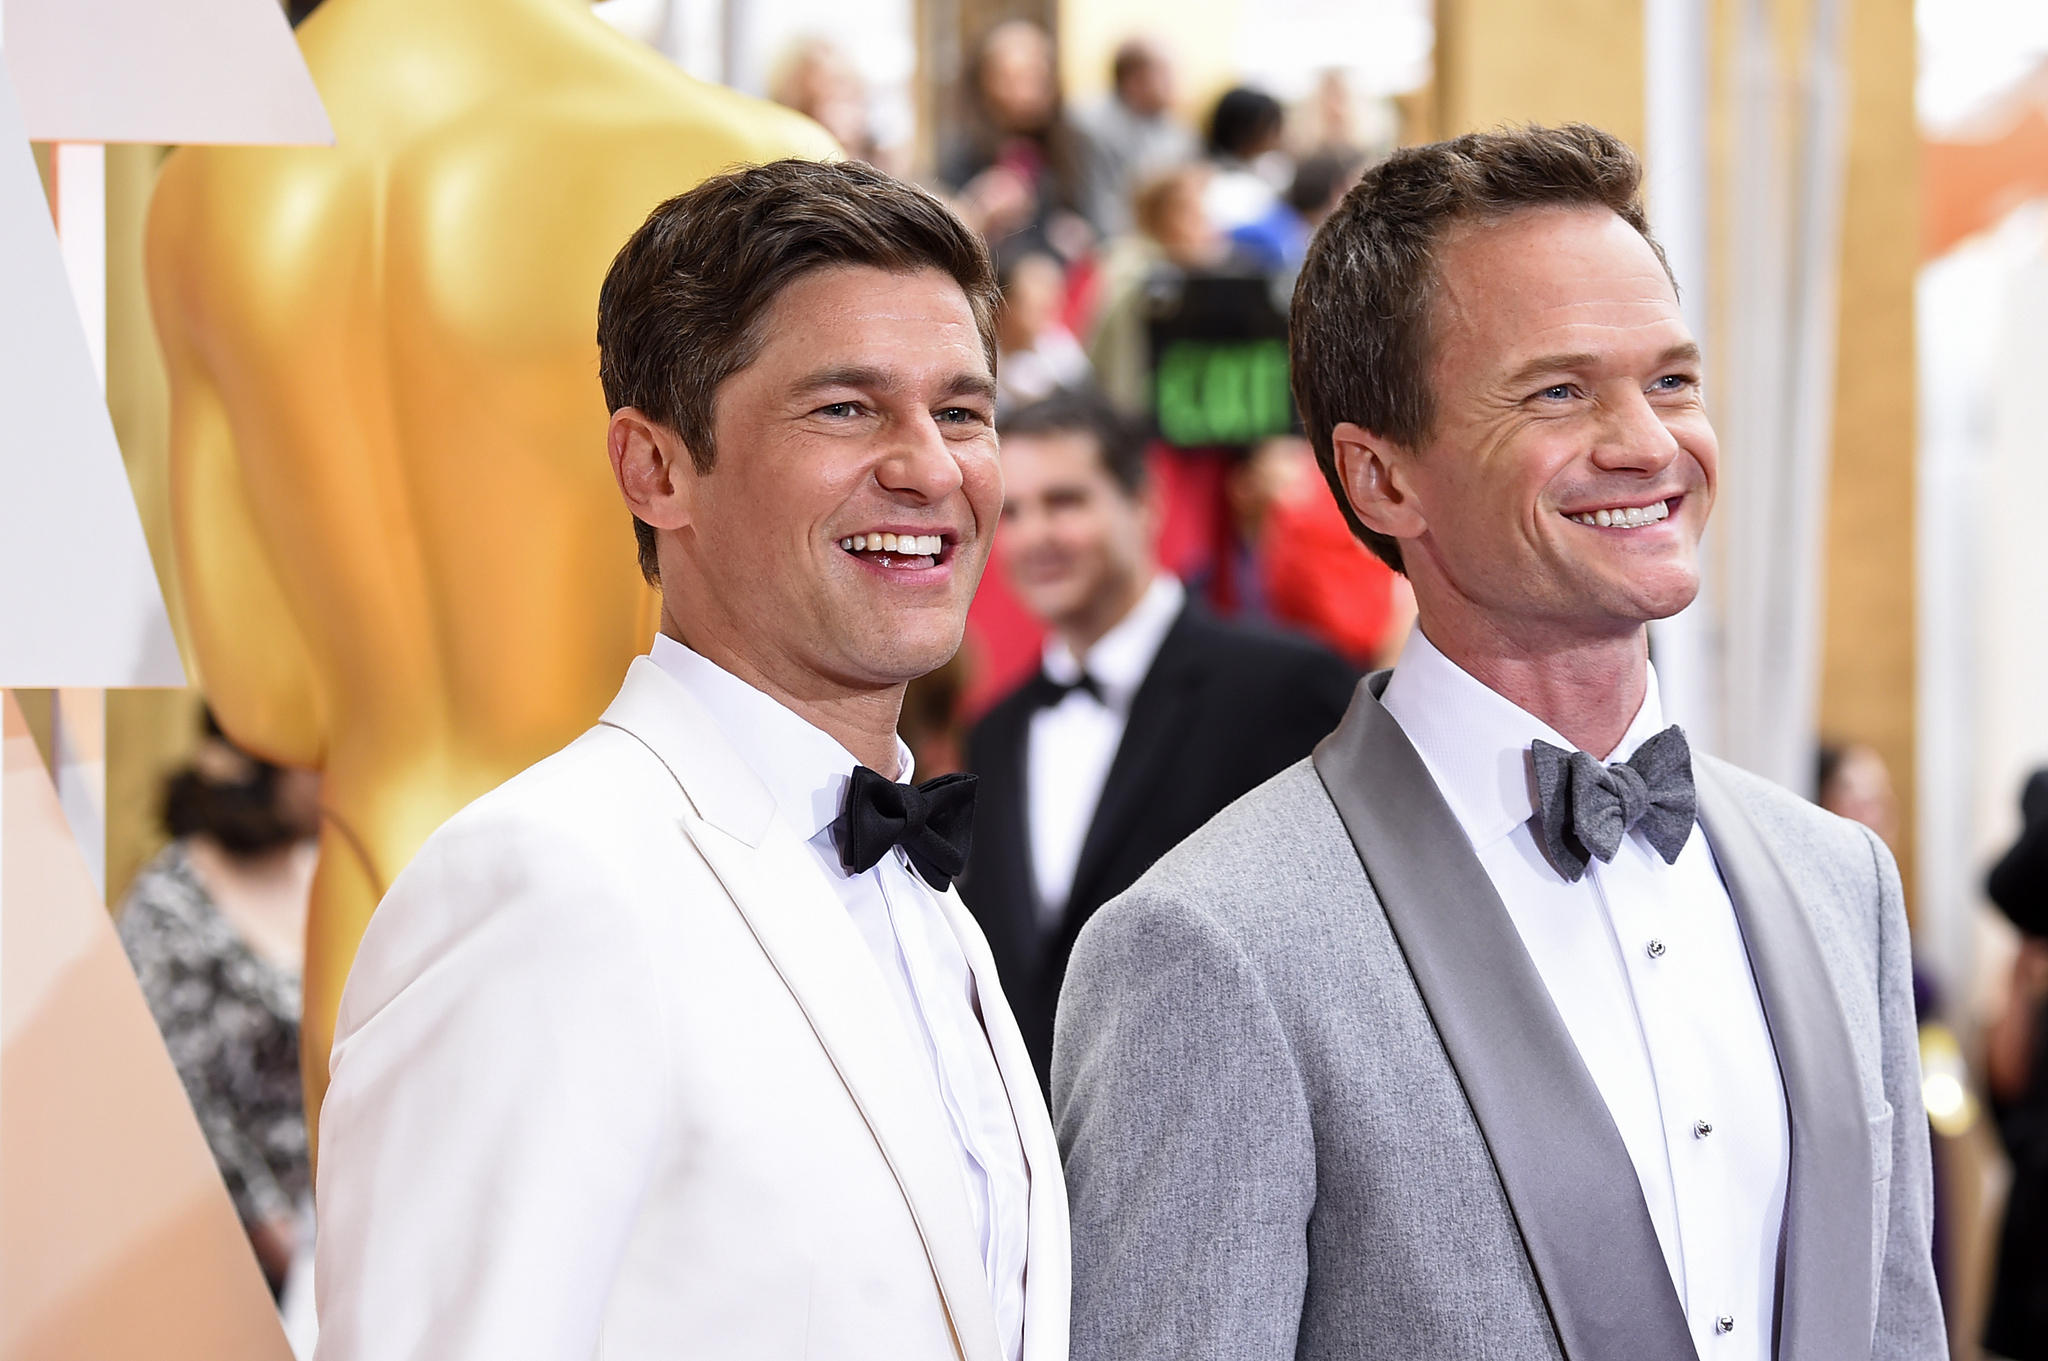 Neil Patrick Harris and David Burtka at event of The Oscars (2015)